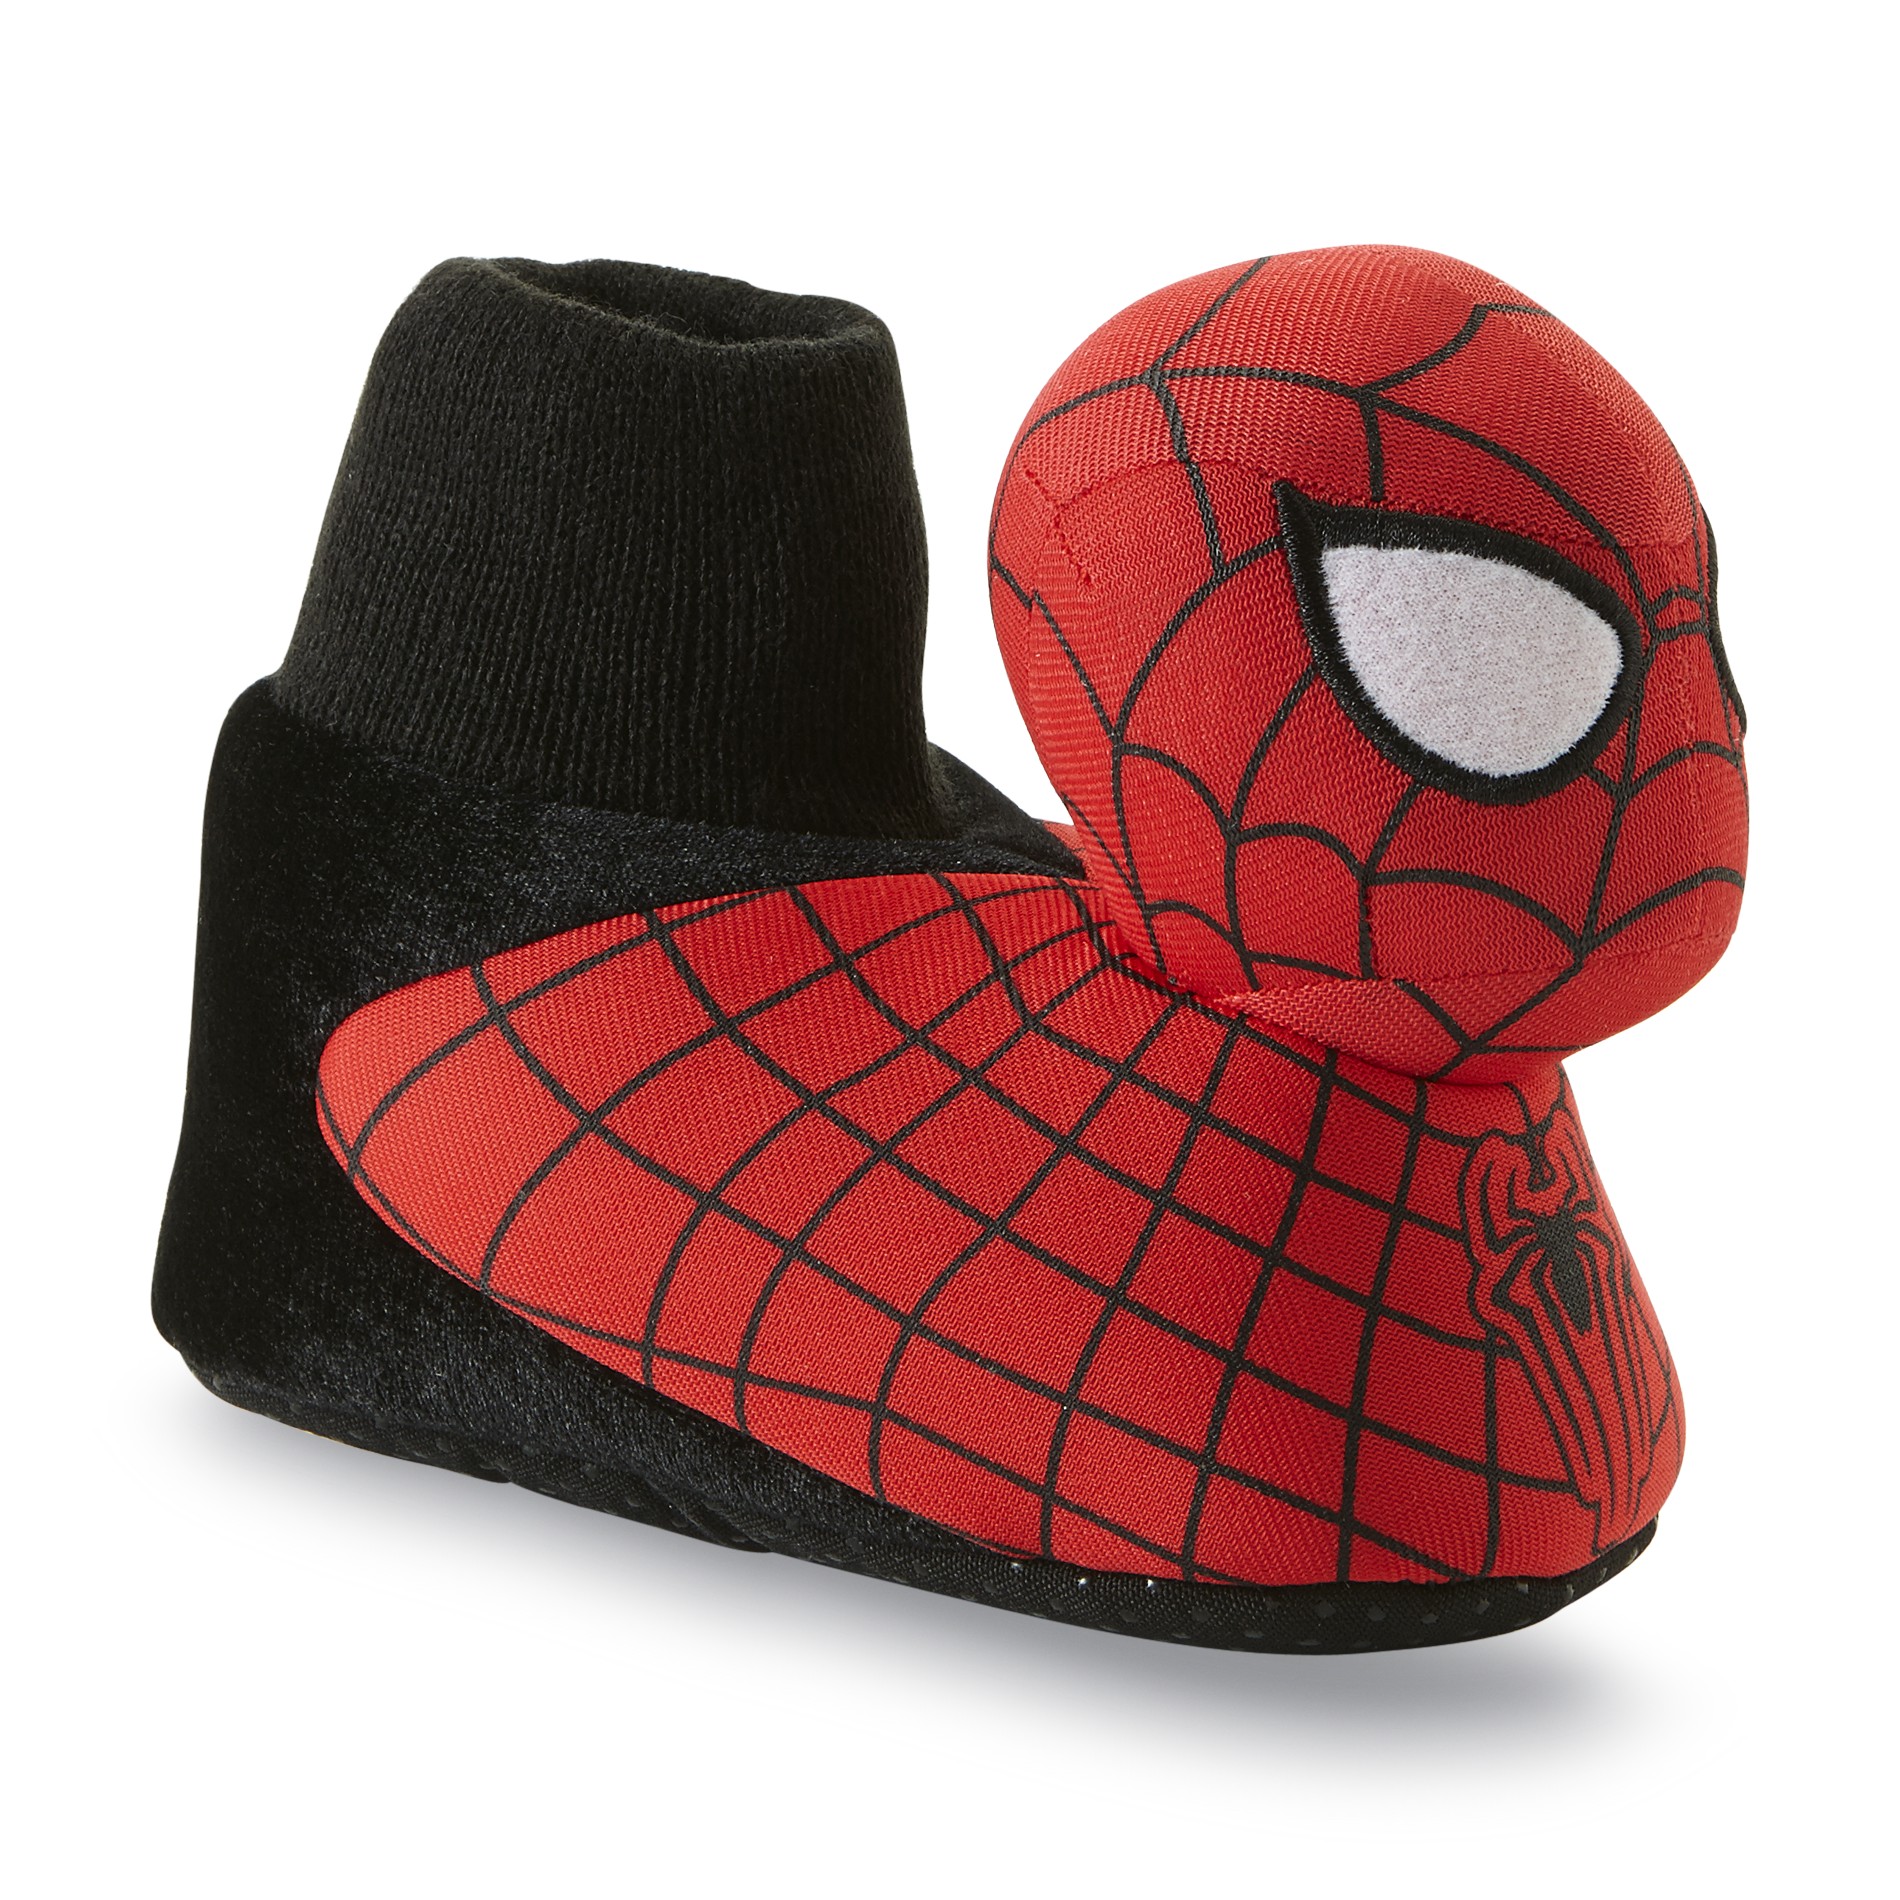 Marvel Toddler Boy's Red/Black Slipper - Spider-Man